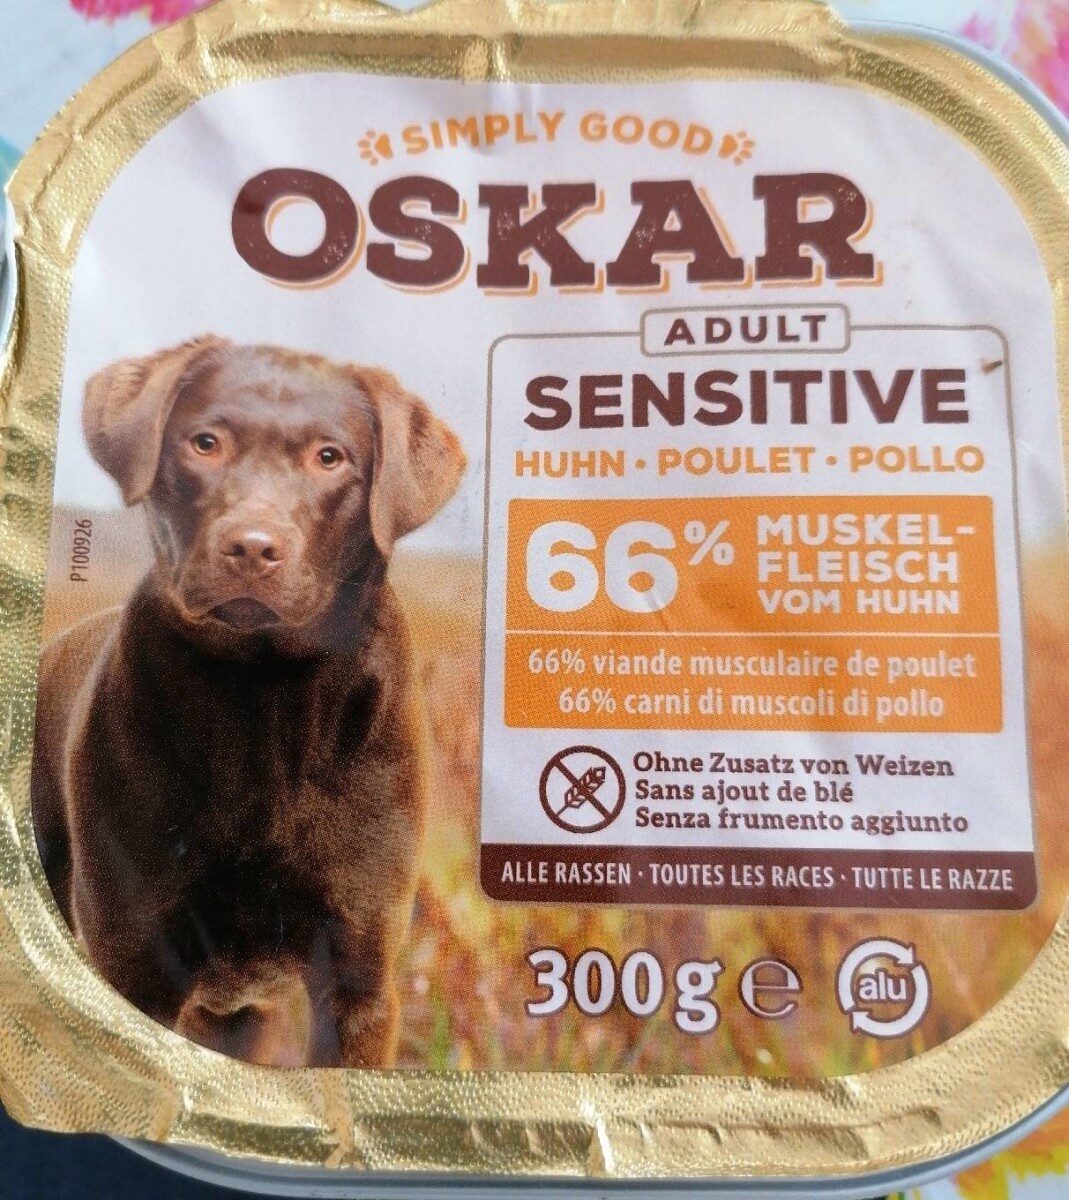 Oskar adult sensitive - Product - fr